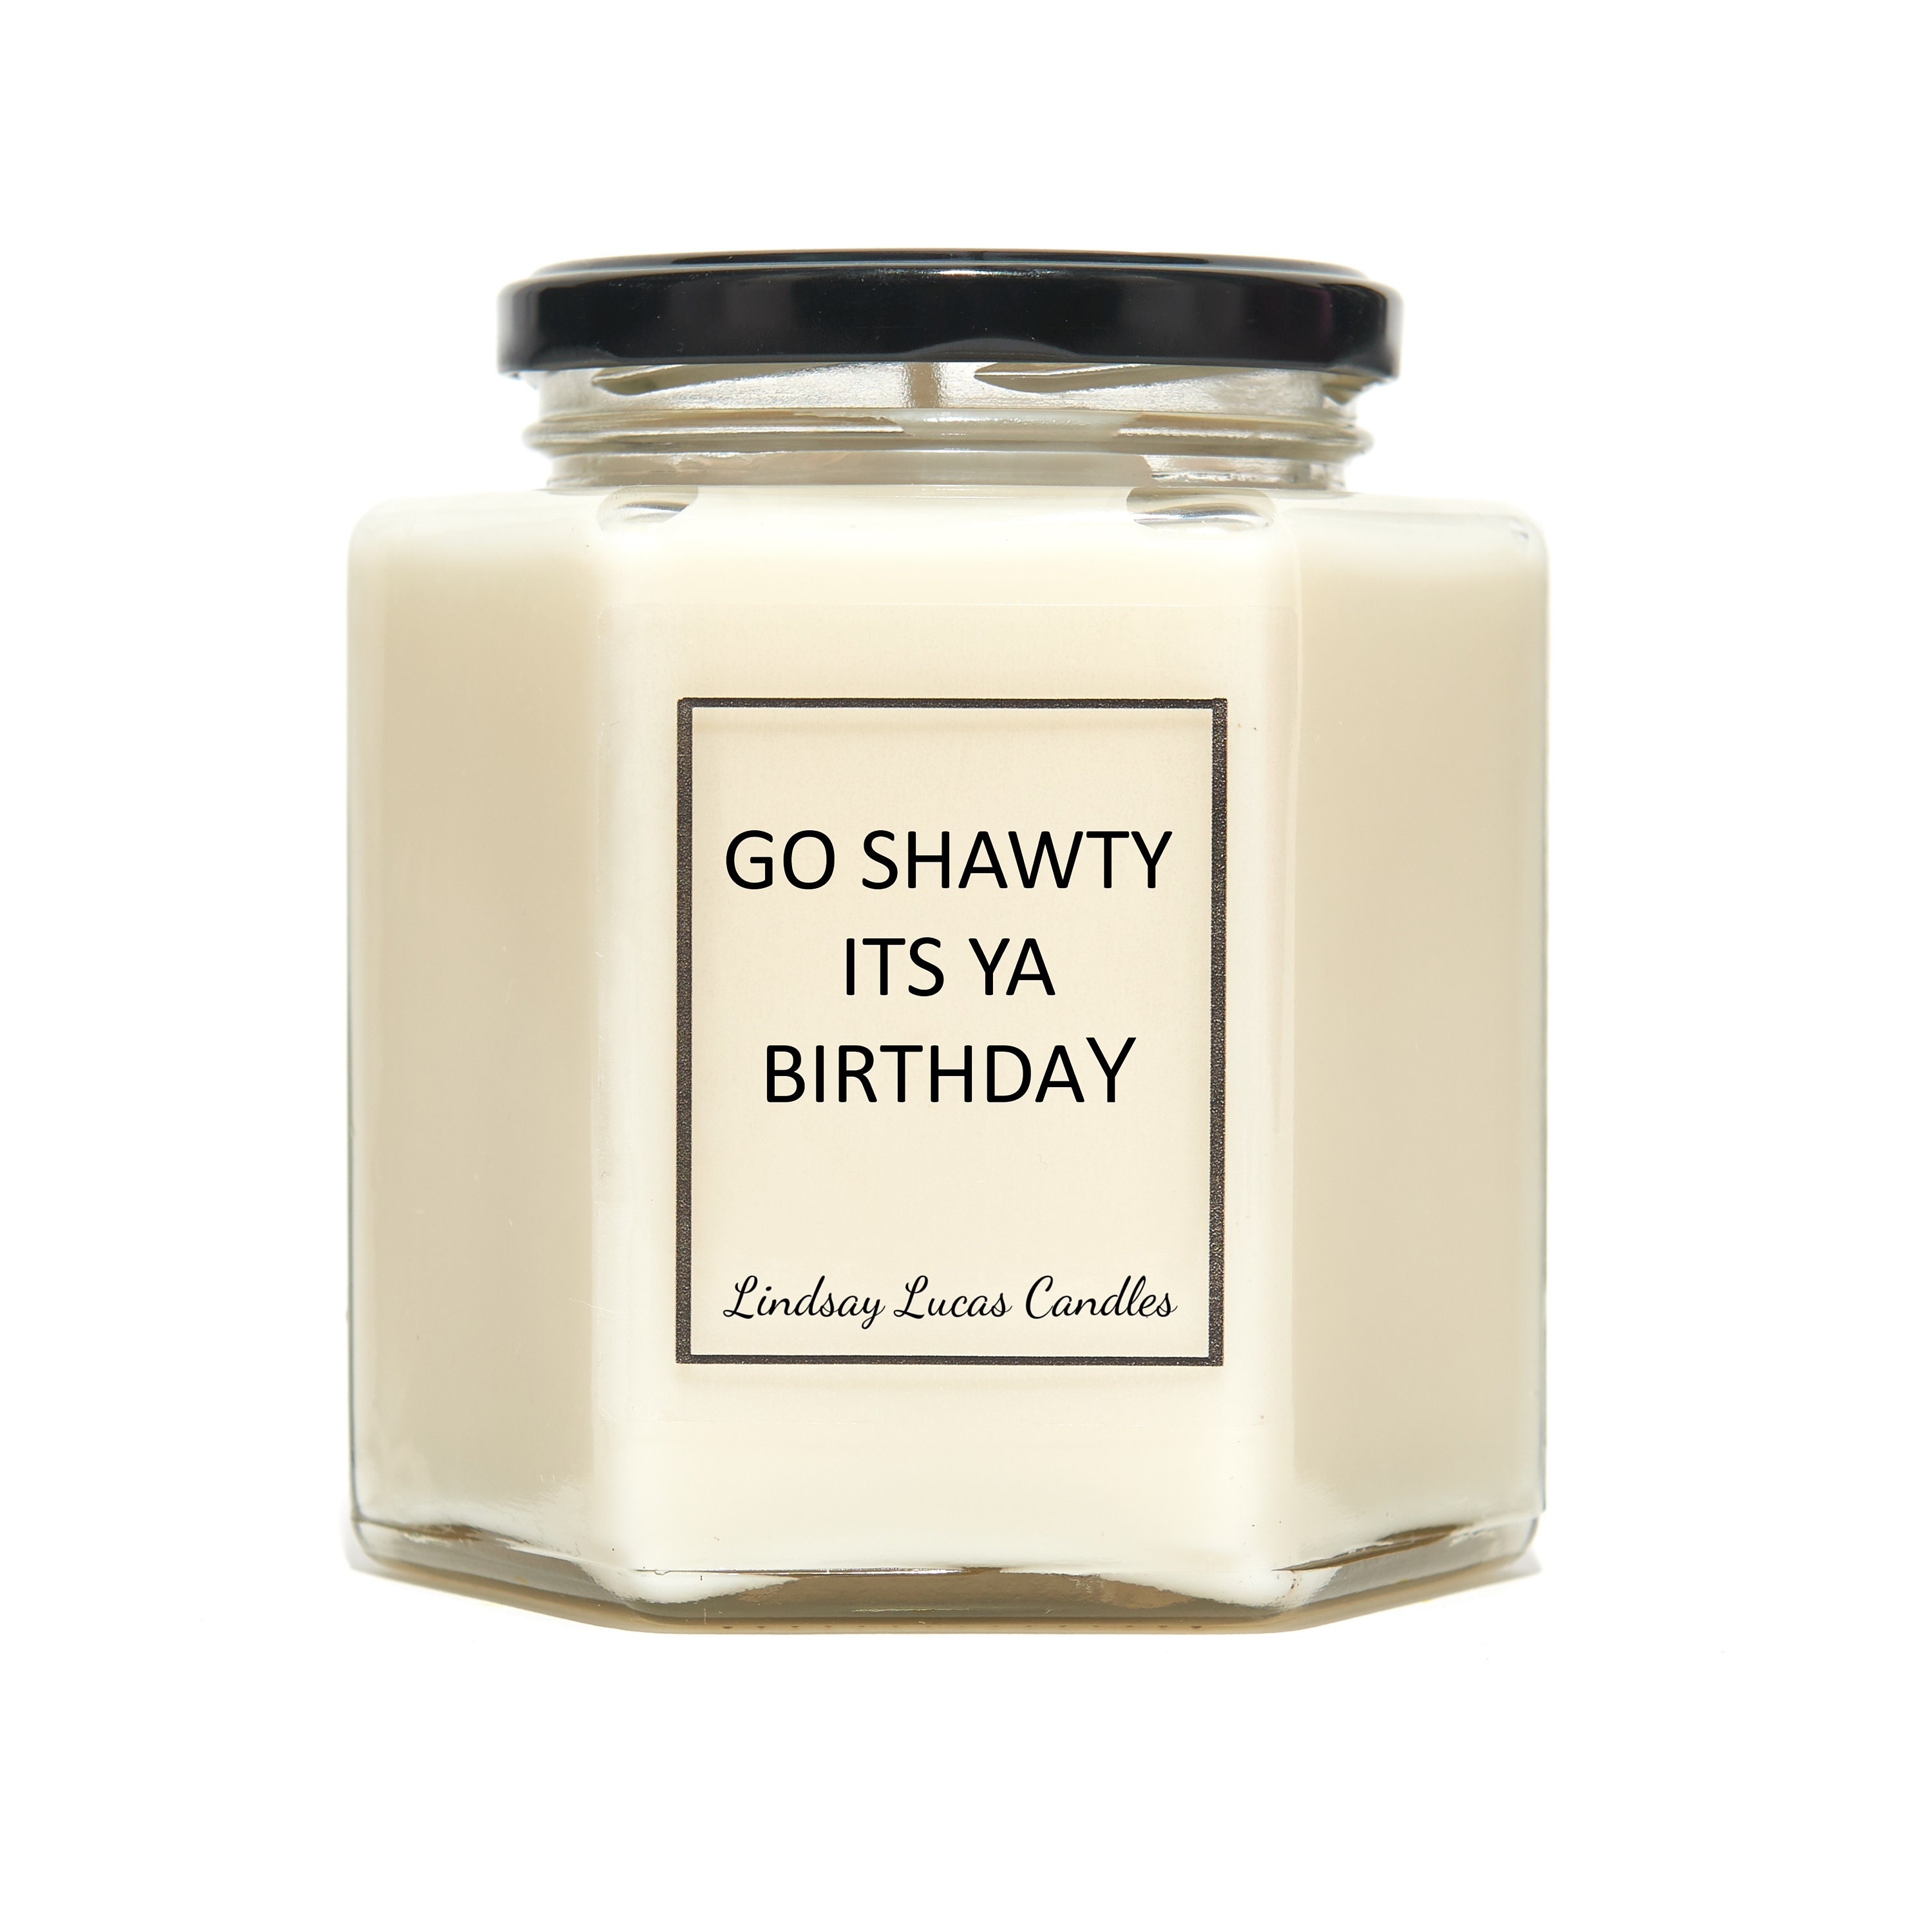 Go Shawty, It's Sherbert Day - 9oz Glass Jar Soy Candle - Vanilla Bean